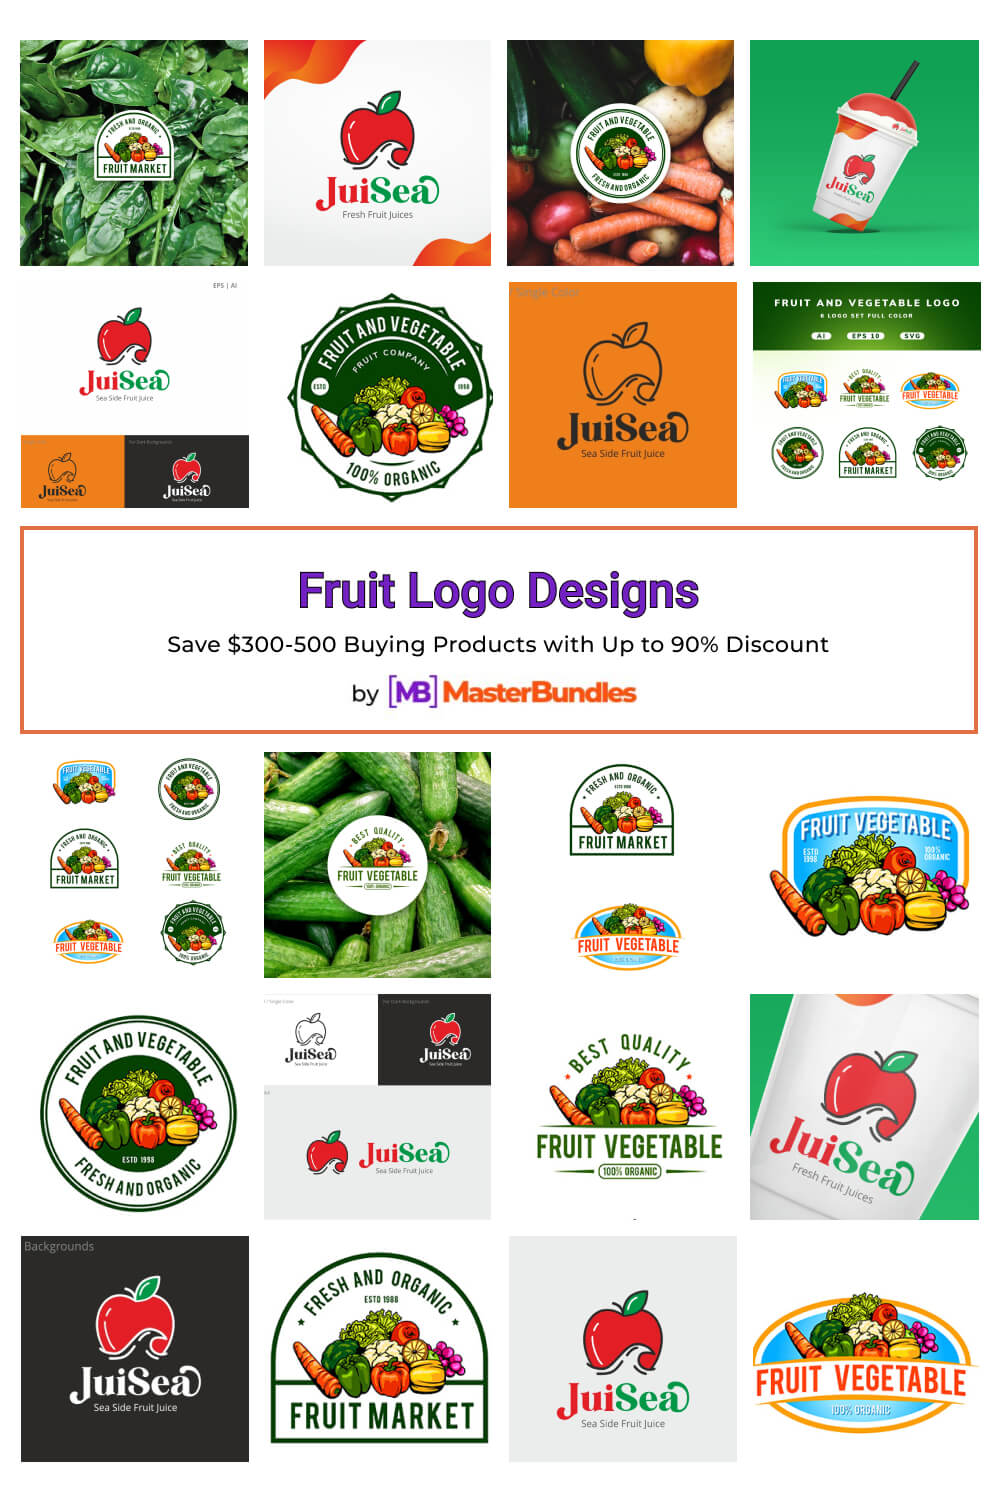 fruit logo designs pinterest image.